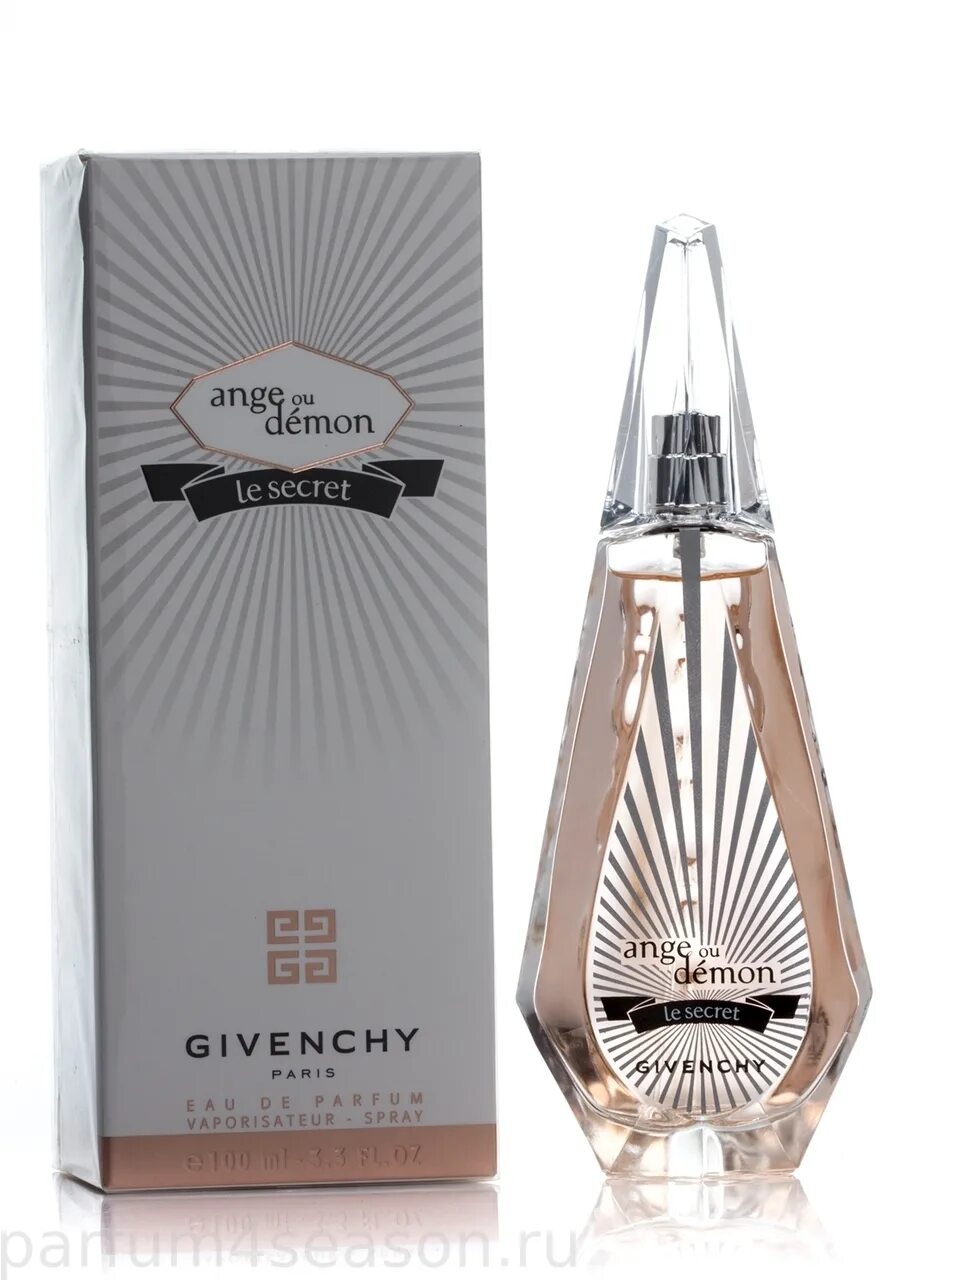 Givenchy le secret купить. Givenchy ange ou Demon le Secret 100 ml. Ange ou Demon le Secret Givenchy 100мл. Ange ou Demon le Secret (2014) Givenchy. Givenchy ange ou Demon 100 мл.